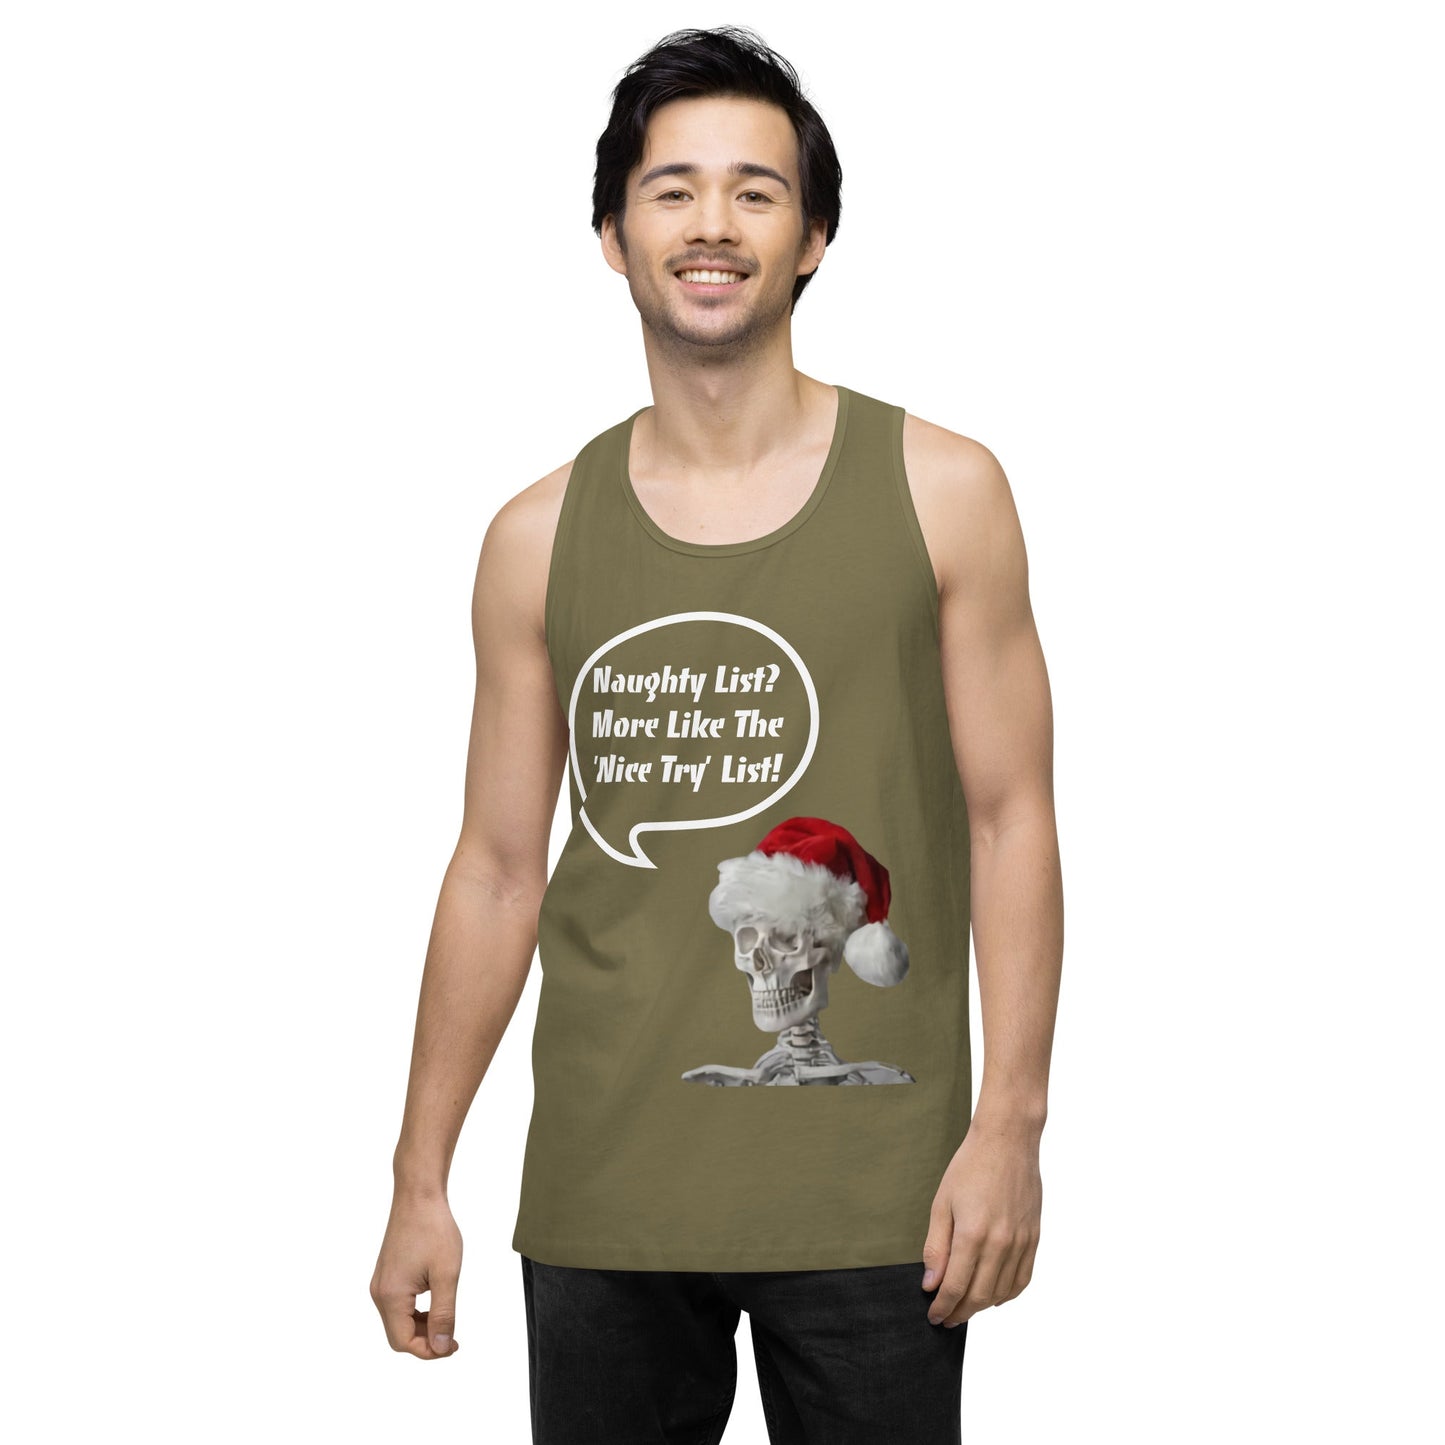 Naughty List? Men’s premium tank top / Christmas Holiday Tank Shirt - Lizard Vigilante